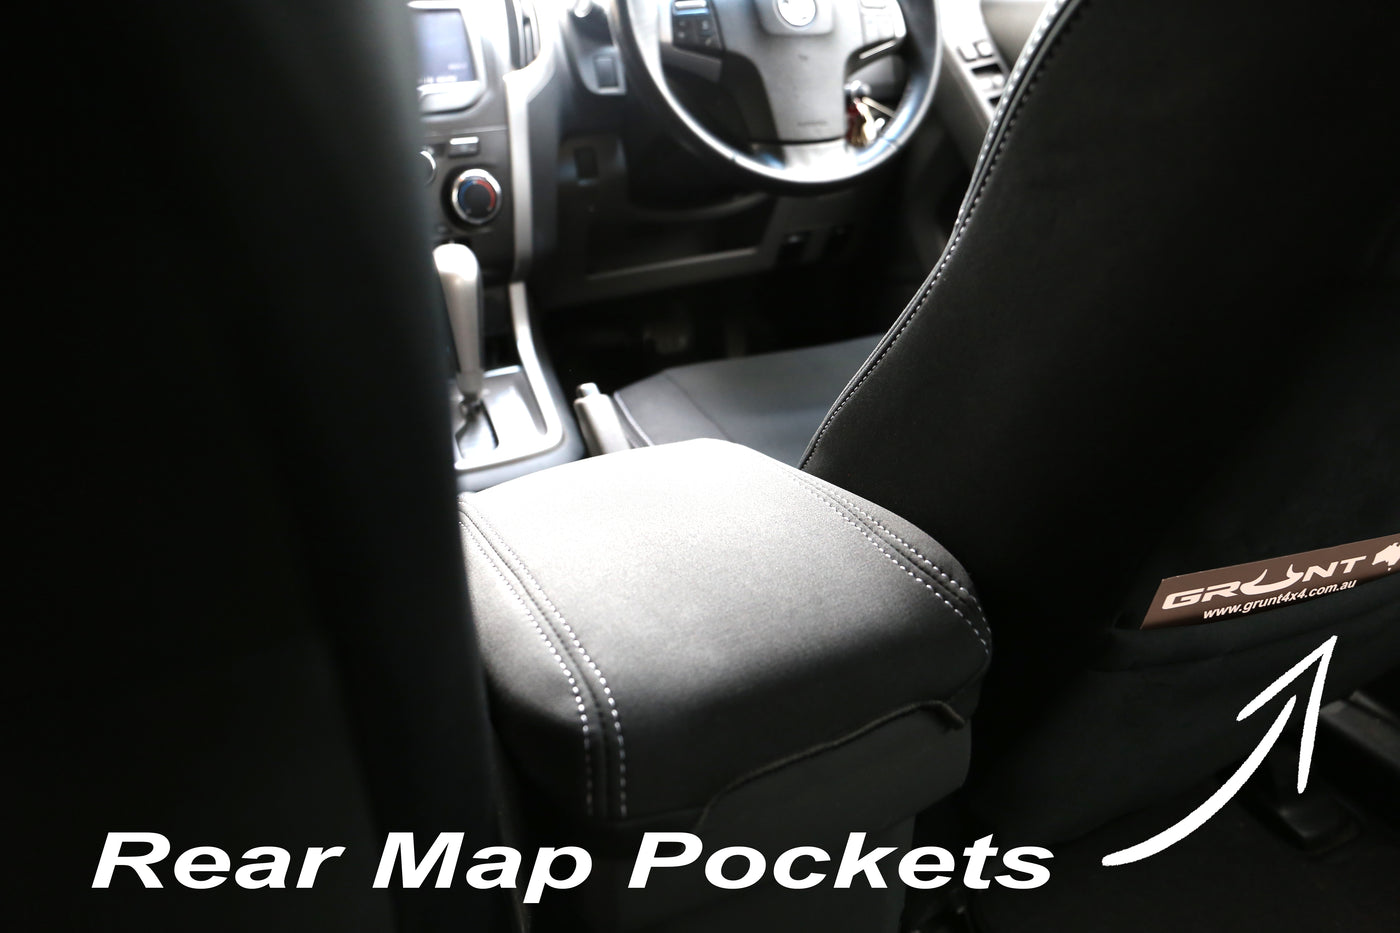 Mazda BT-50 PX2 neoprene car seat covers 2016-2019 (series 2) Optional Front, Rear, Front & Rear FRONT&REAR